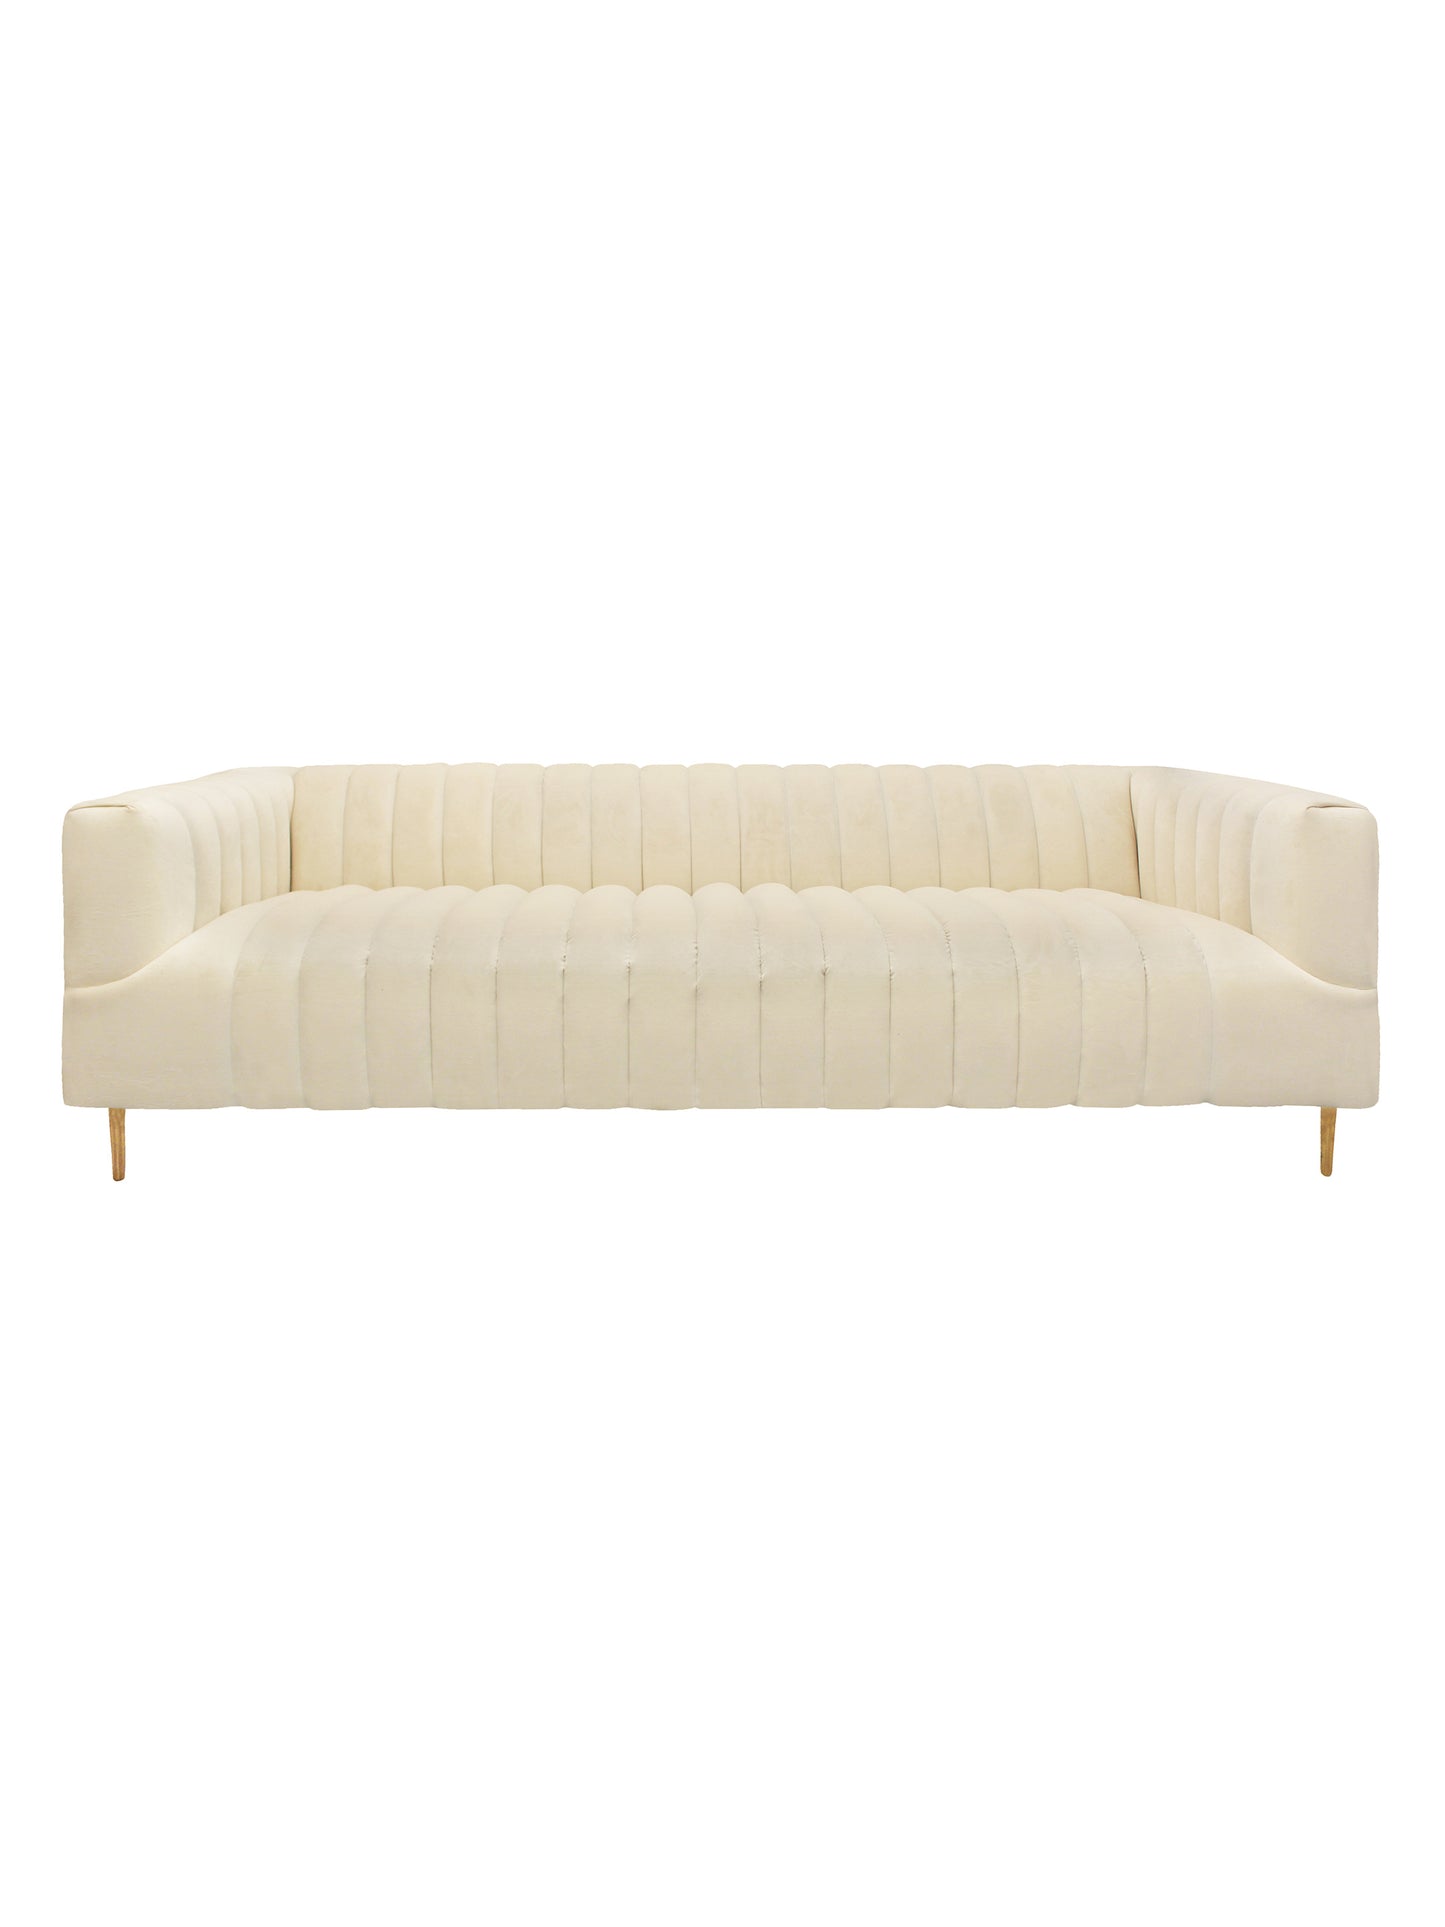 Eclectic Home Sofa Rutland Ivory